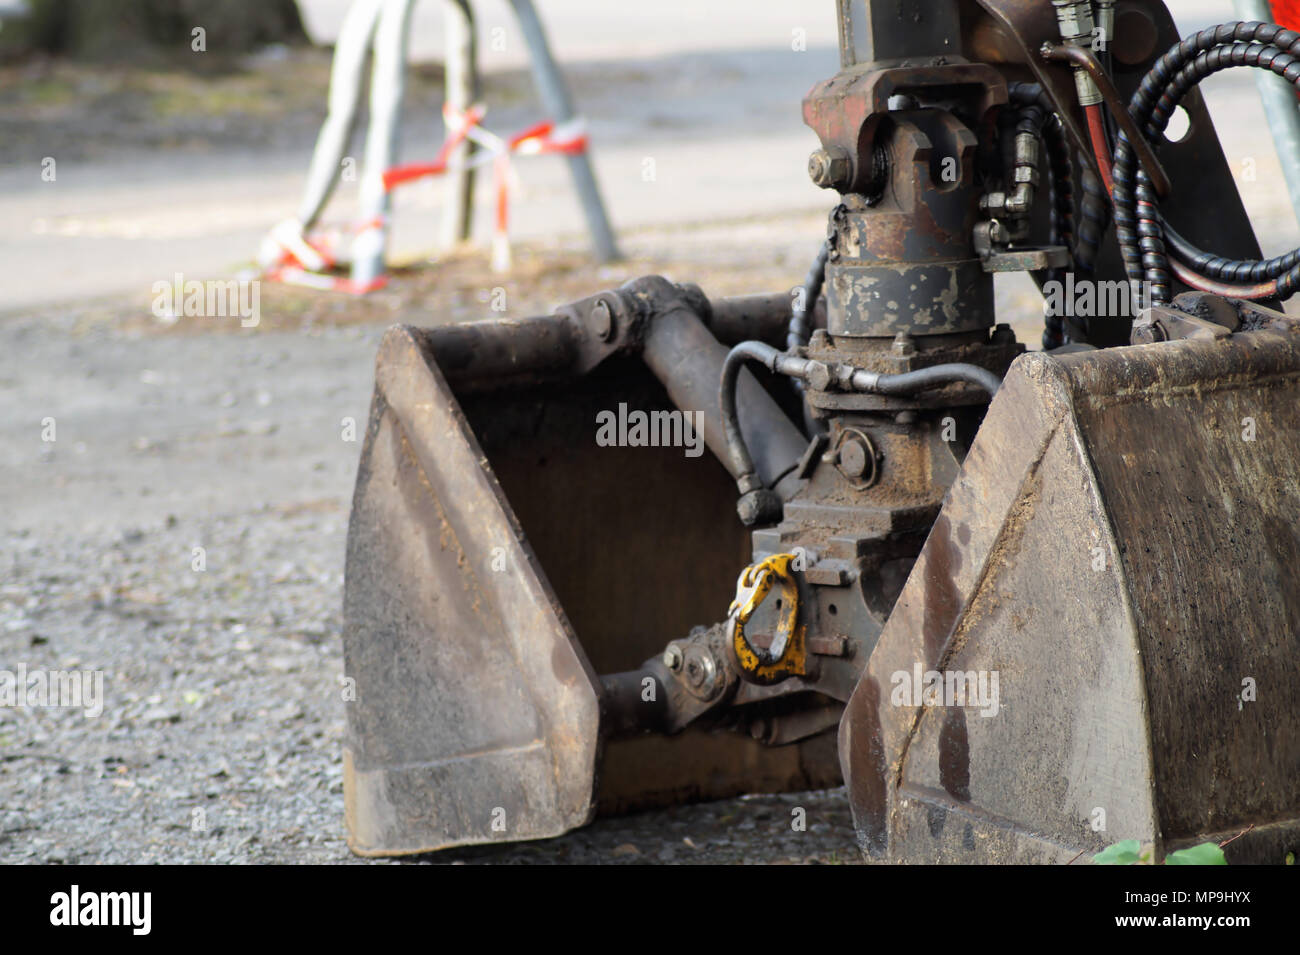 Bagger shovel on a construction site Stock Photo